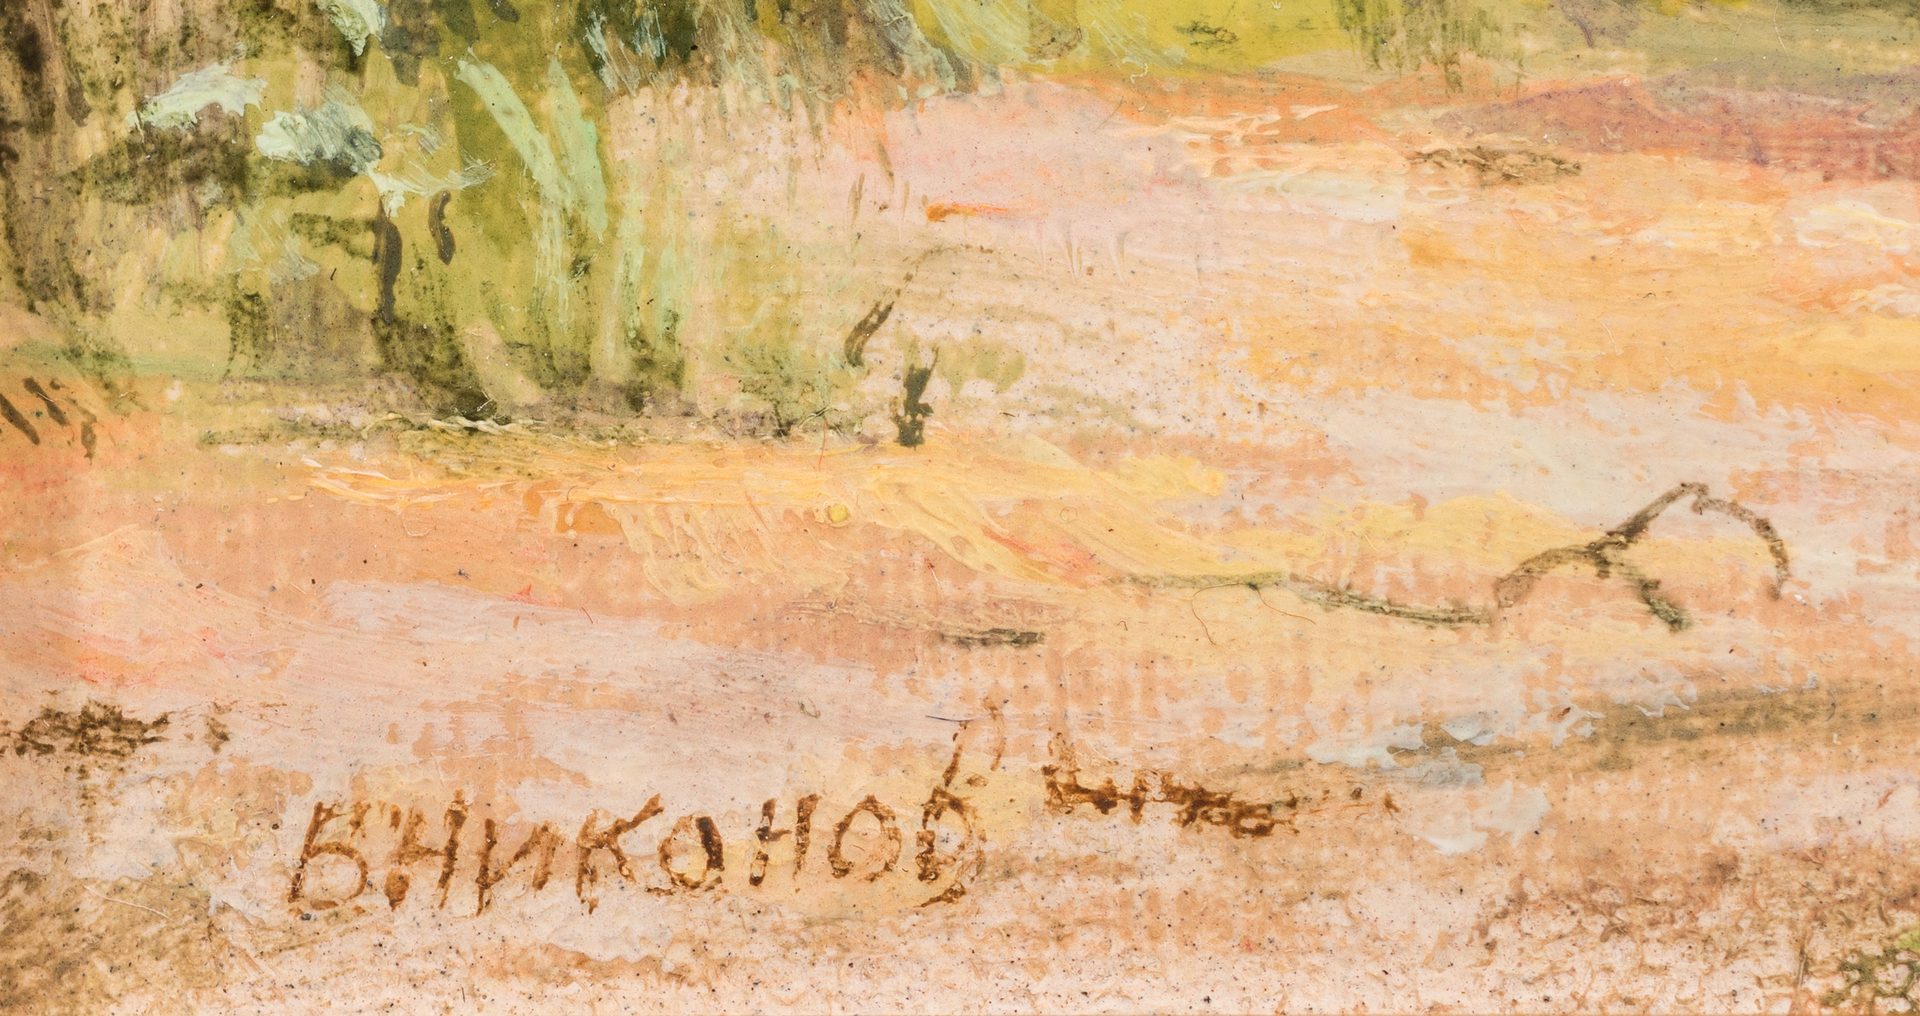 Lot 220: 4 Russian Miniature O/B Landscapes